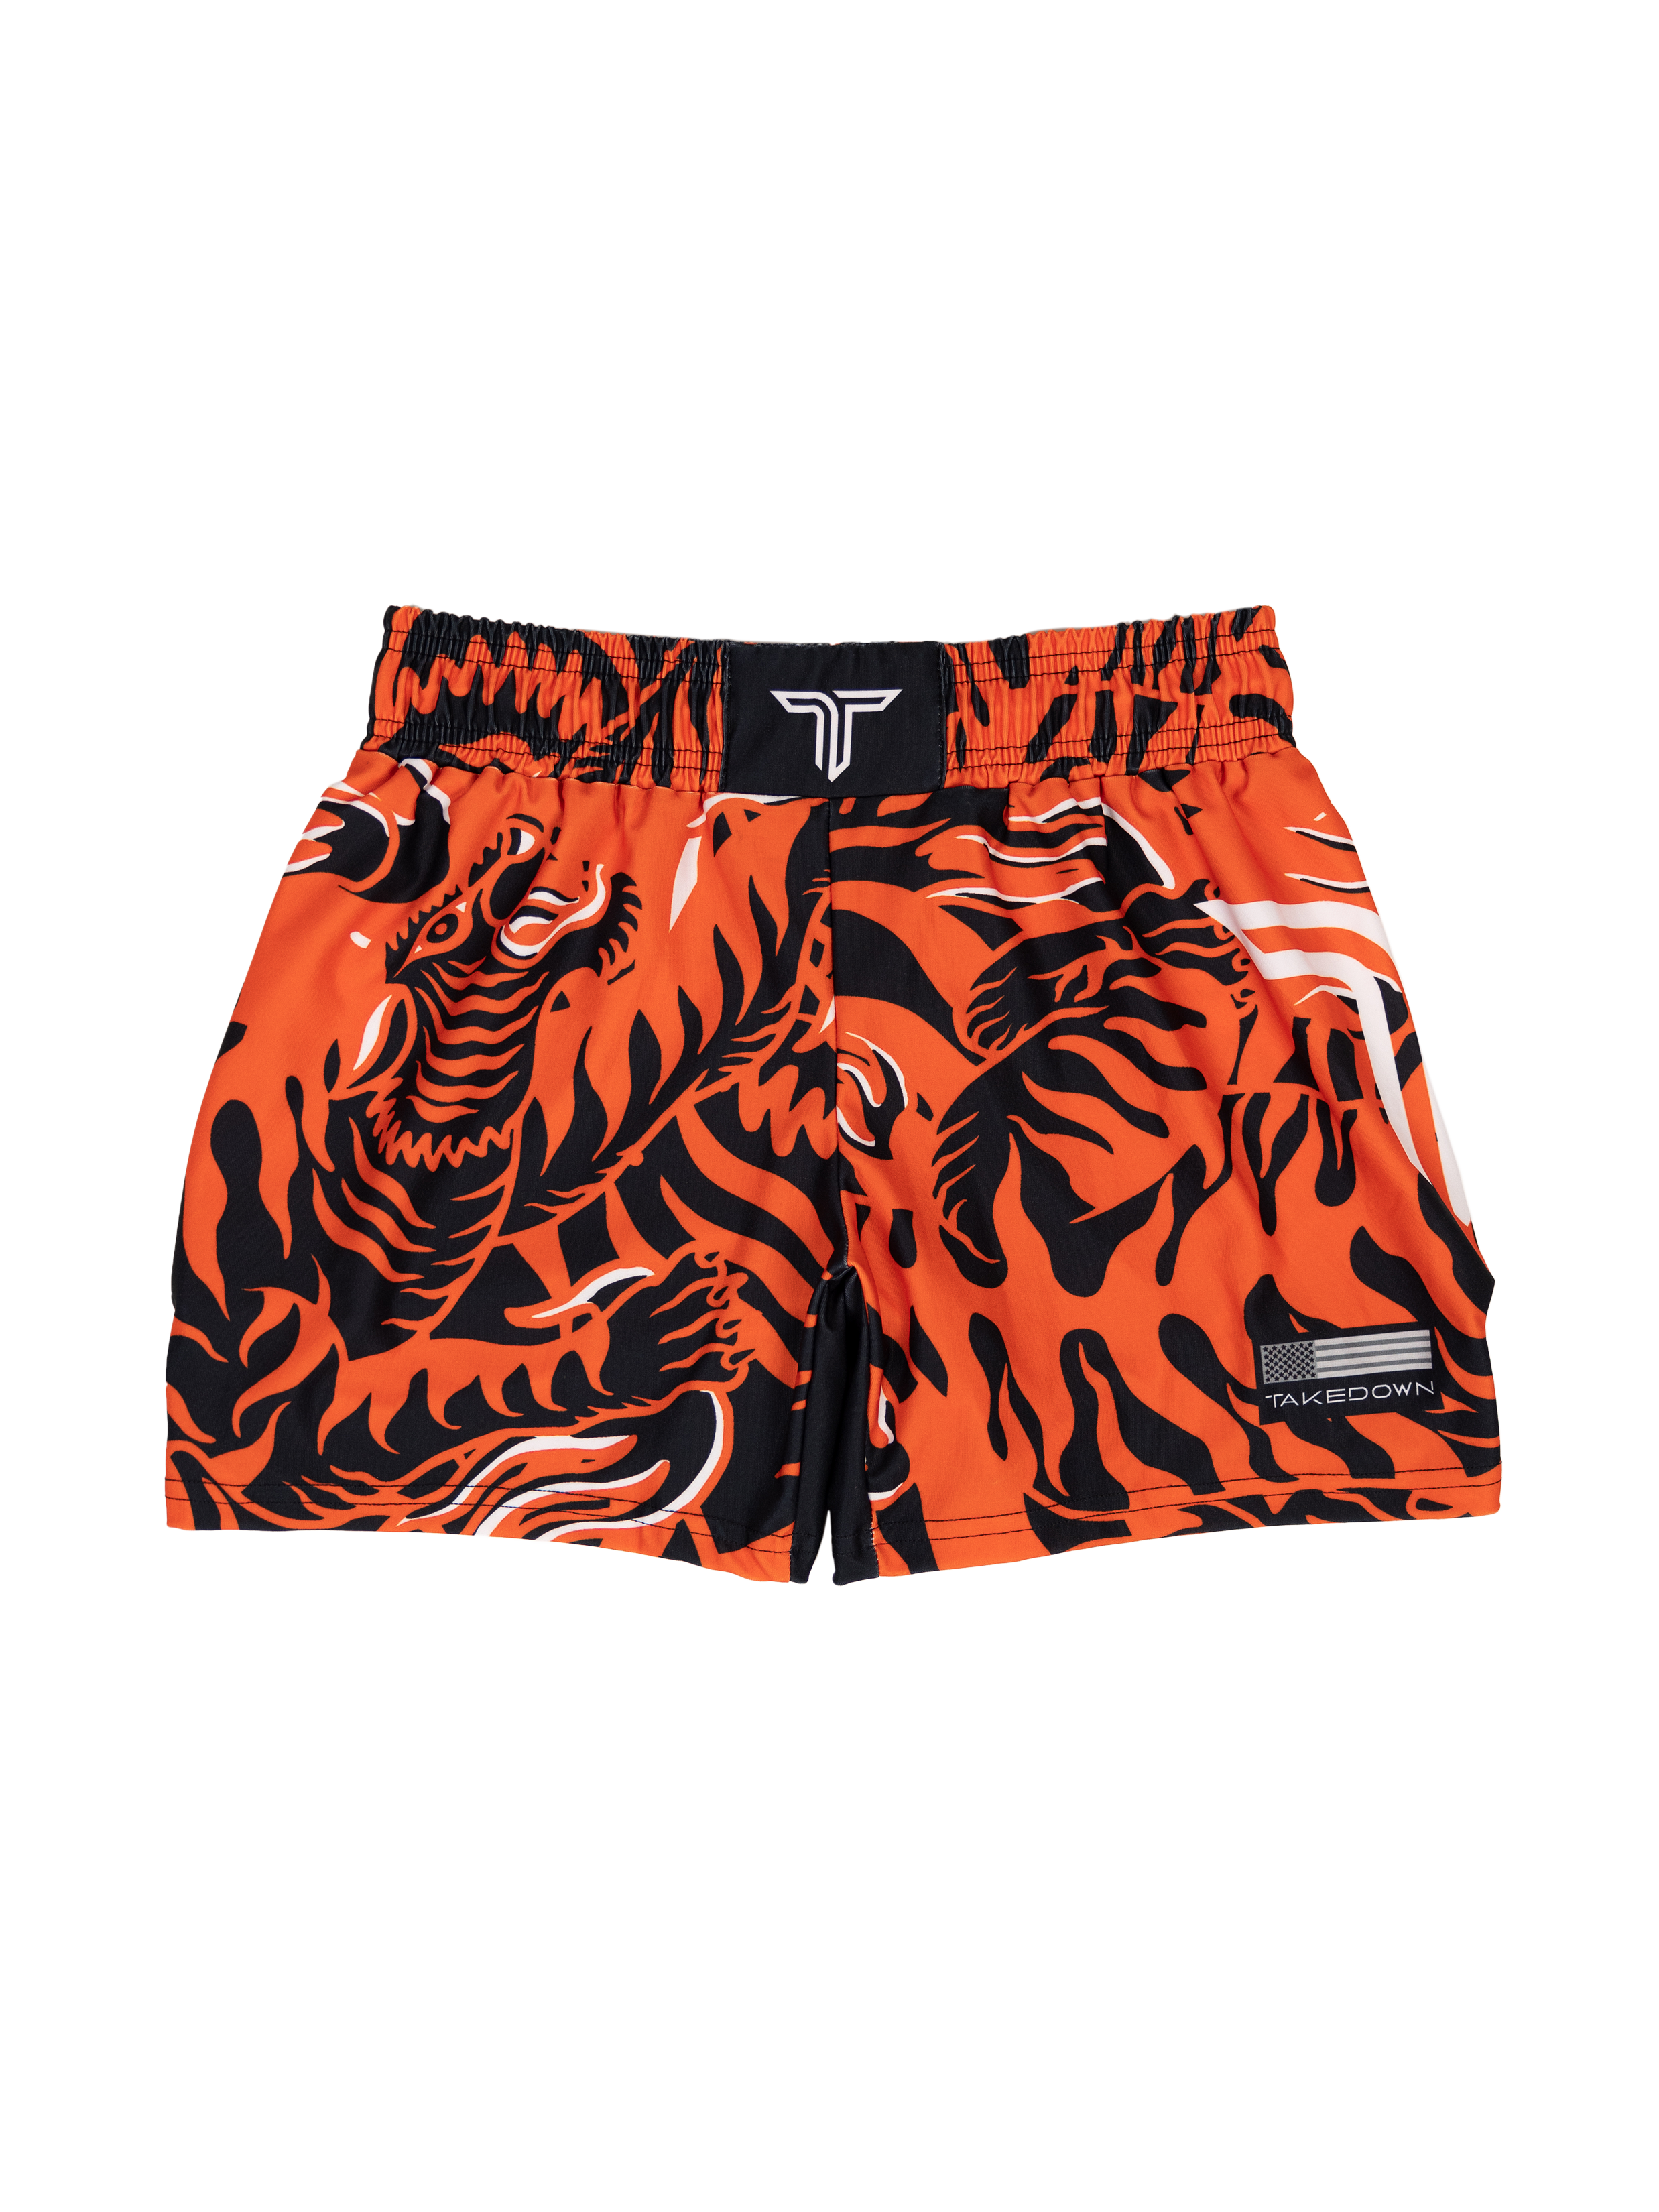 'Tiger Fight' Fight Shorts - Caution Orange (5